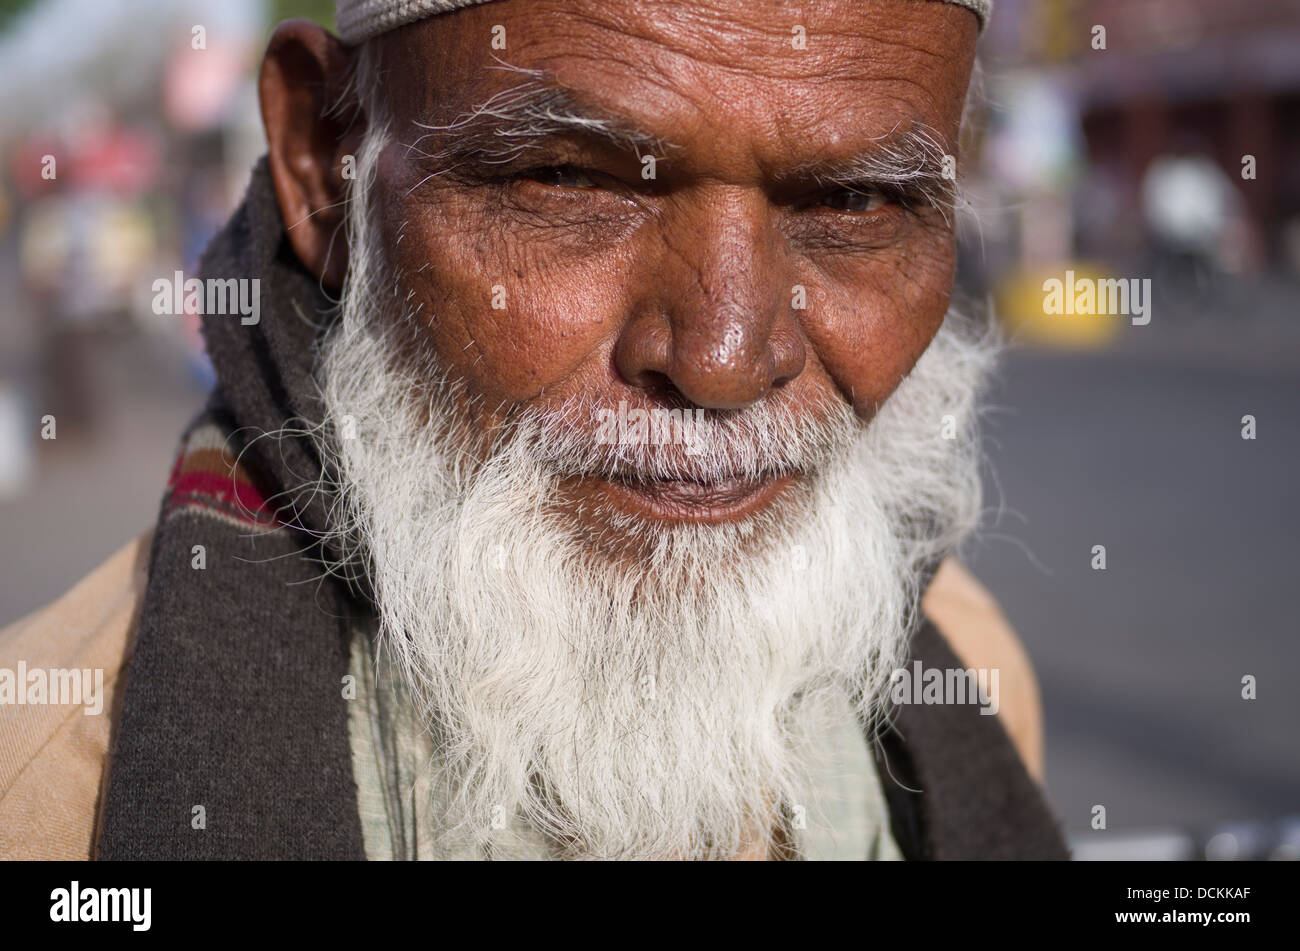 Elderly Indian man with white beard - Jaipur, Rajasthan, India Stock Photo